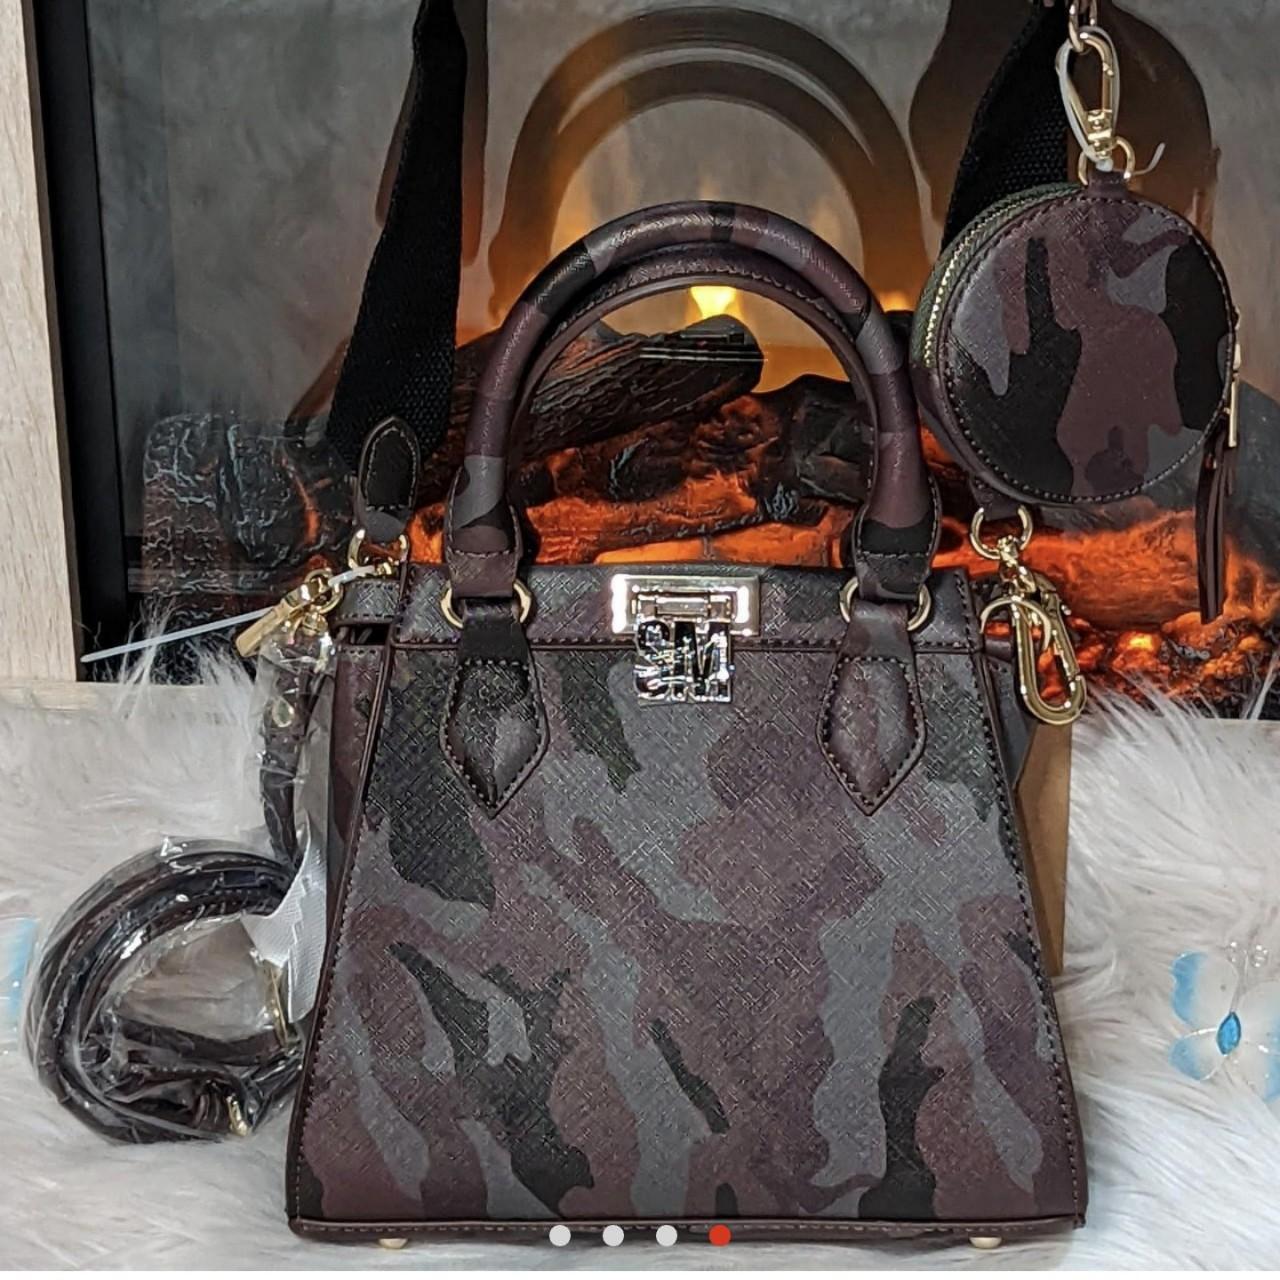 🪖⭐Steve Madden Bijoux Crossbody Bag. This bag is